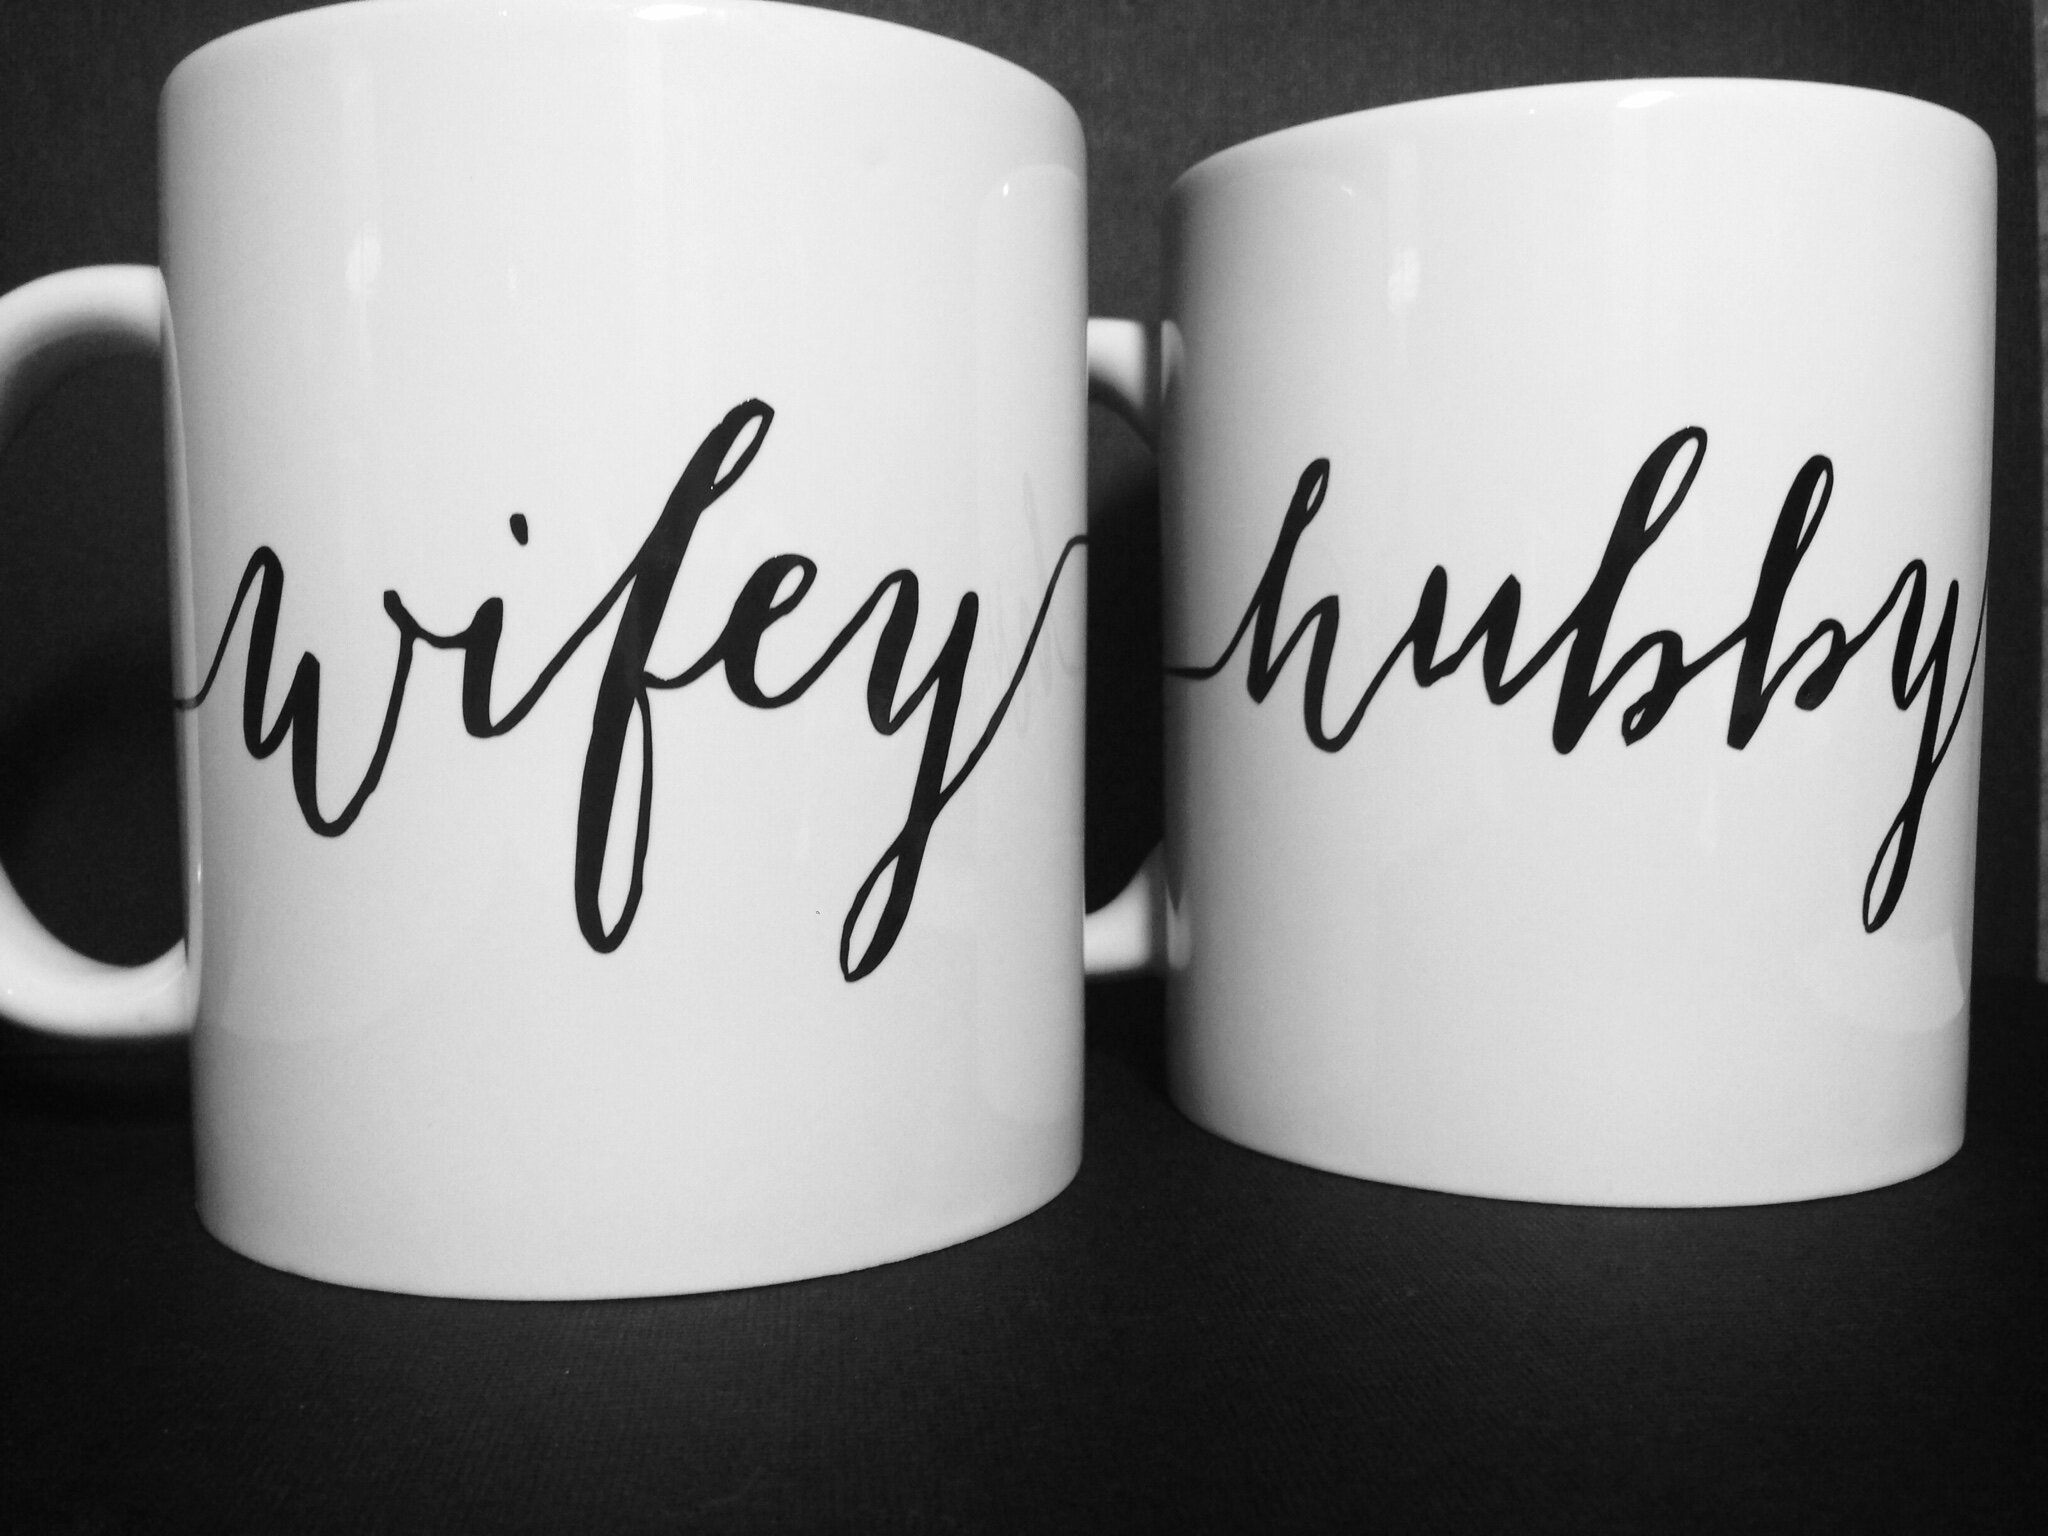 WIFE COFFEE MUG, Wifey for Lifey Mug, White Coffee Cups, Cute